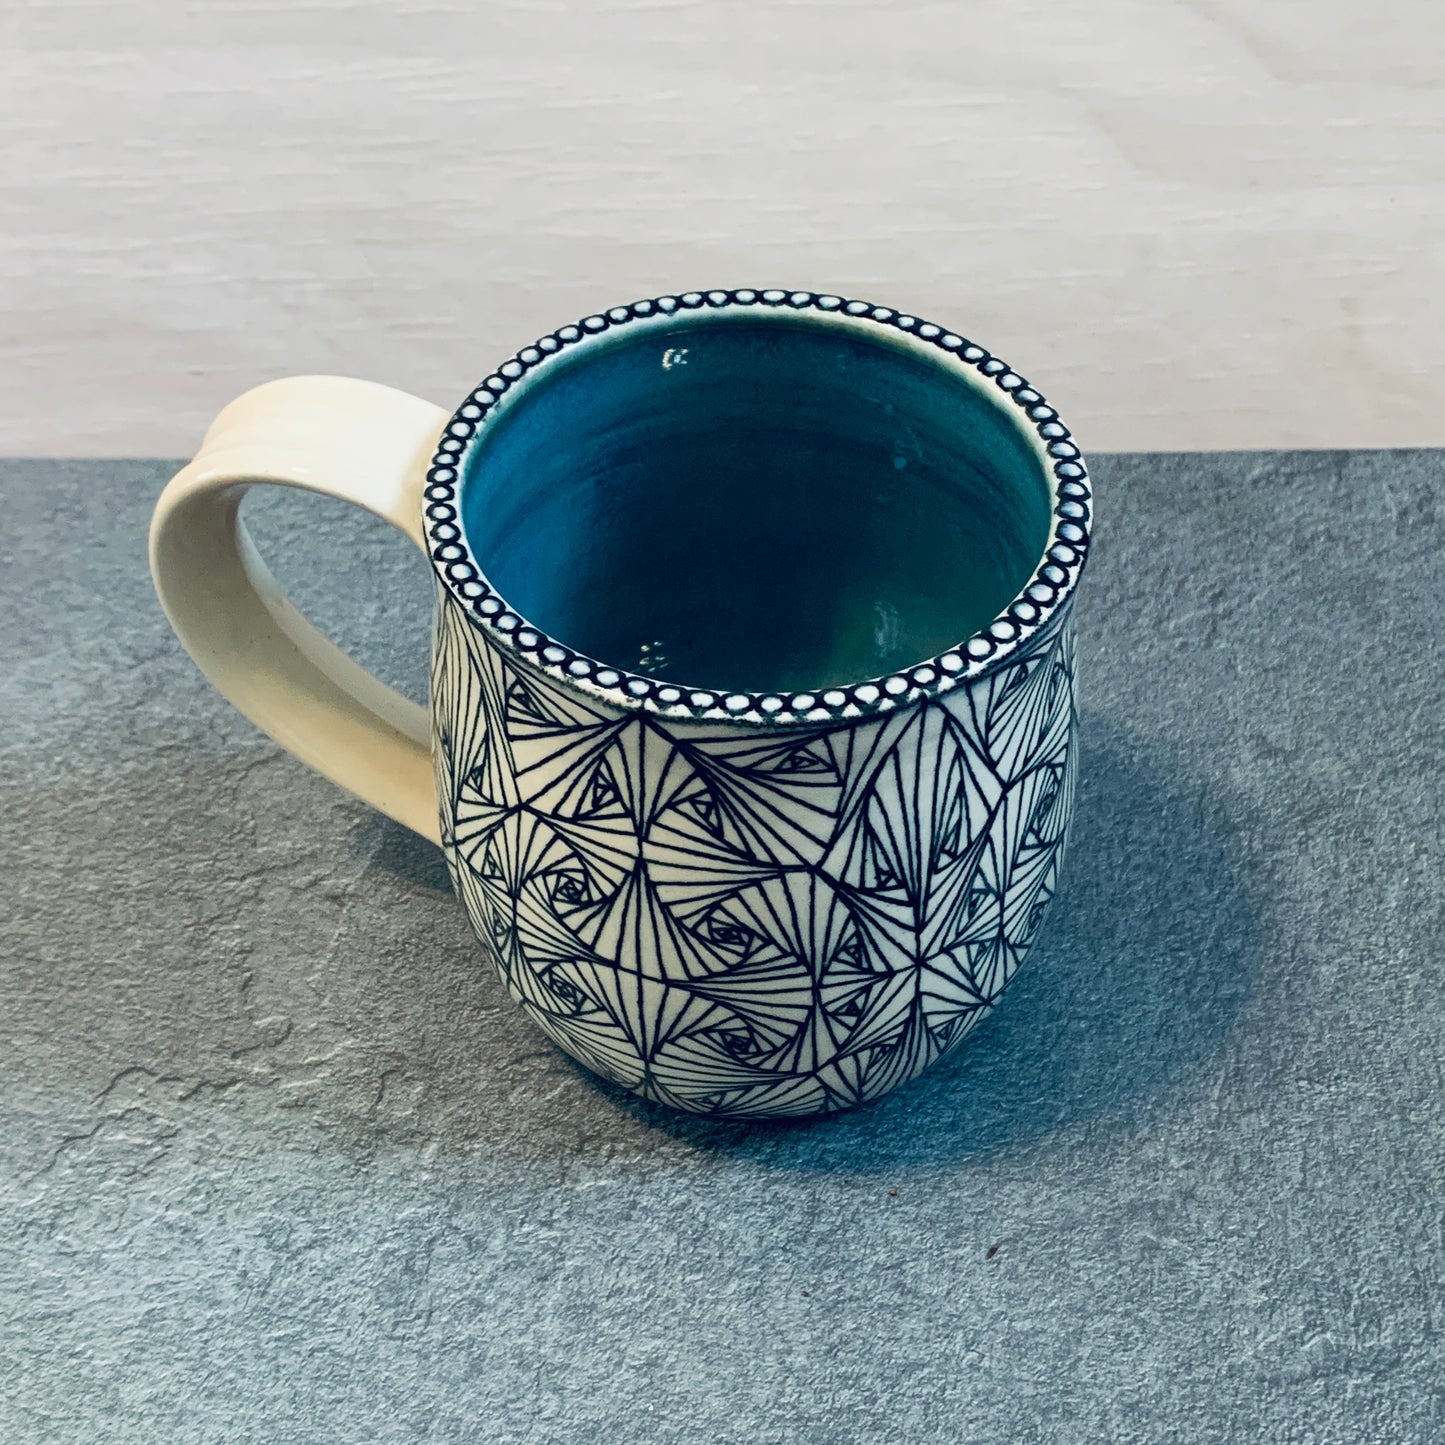 Black and White Tangled Turquoise Mug